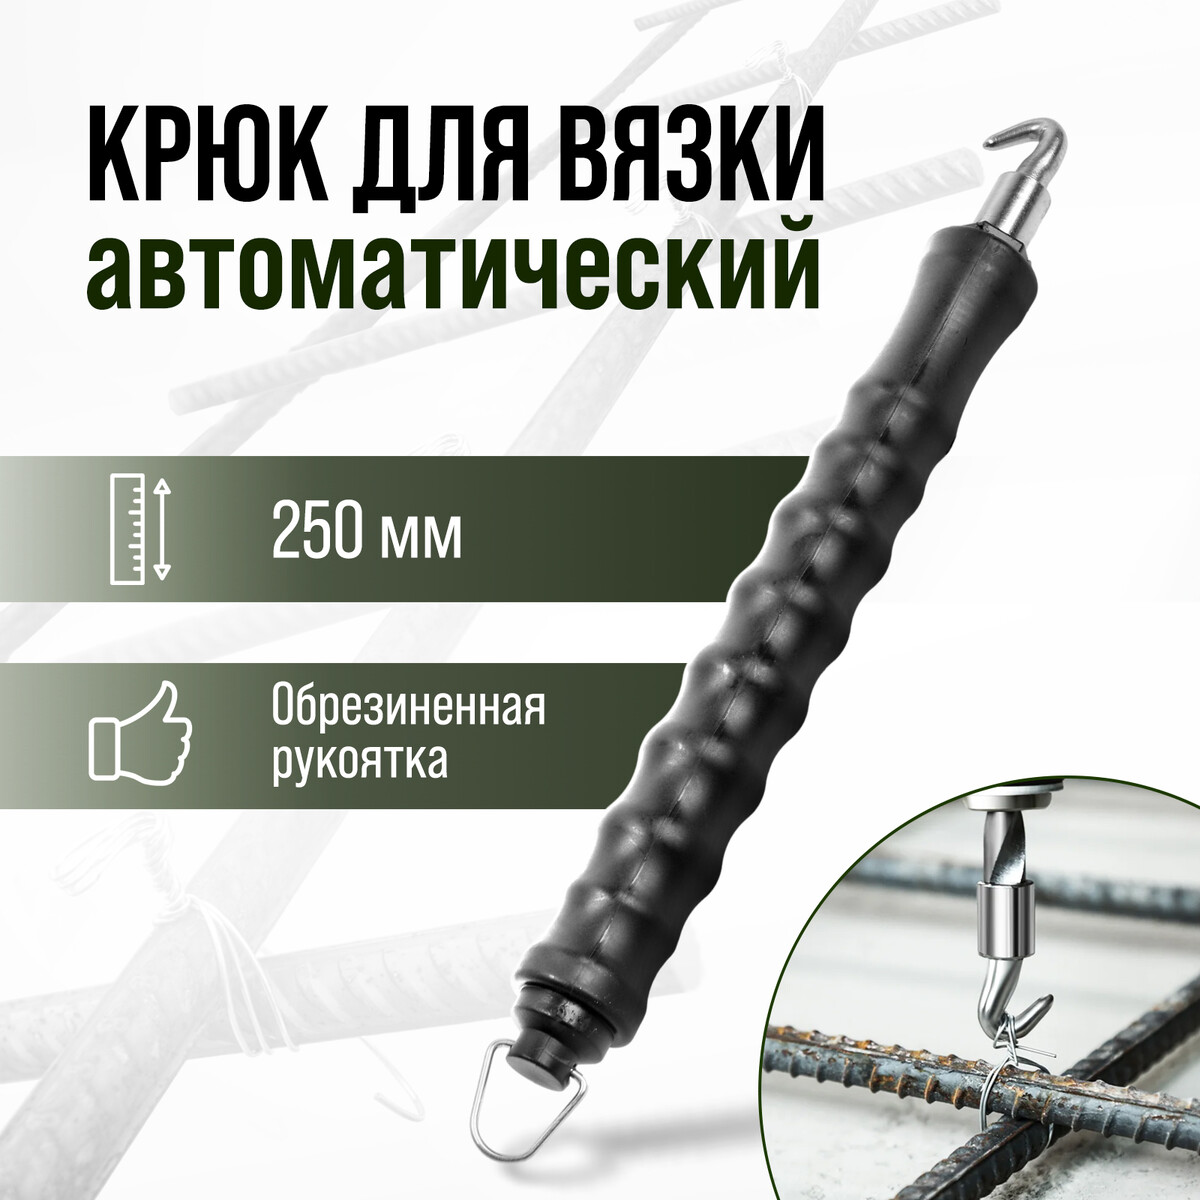 Крюк для вязки арматуры тундра, автоматический, обрезиненная рукоятка, 250 мм крюк для вязки арматуры тундра автоматический обрезиненная рукоятка 250 мм